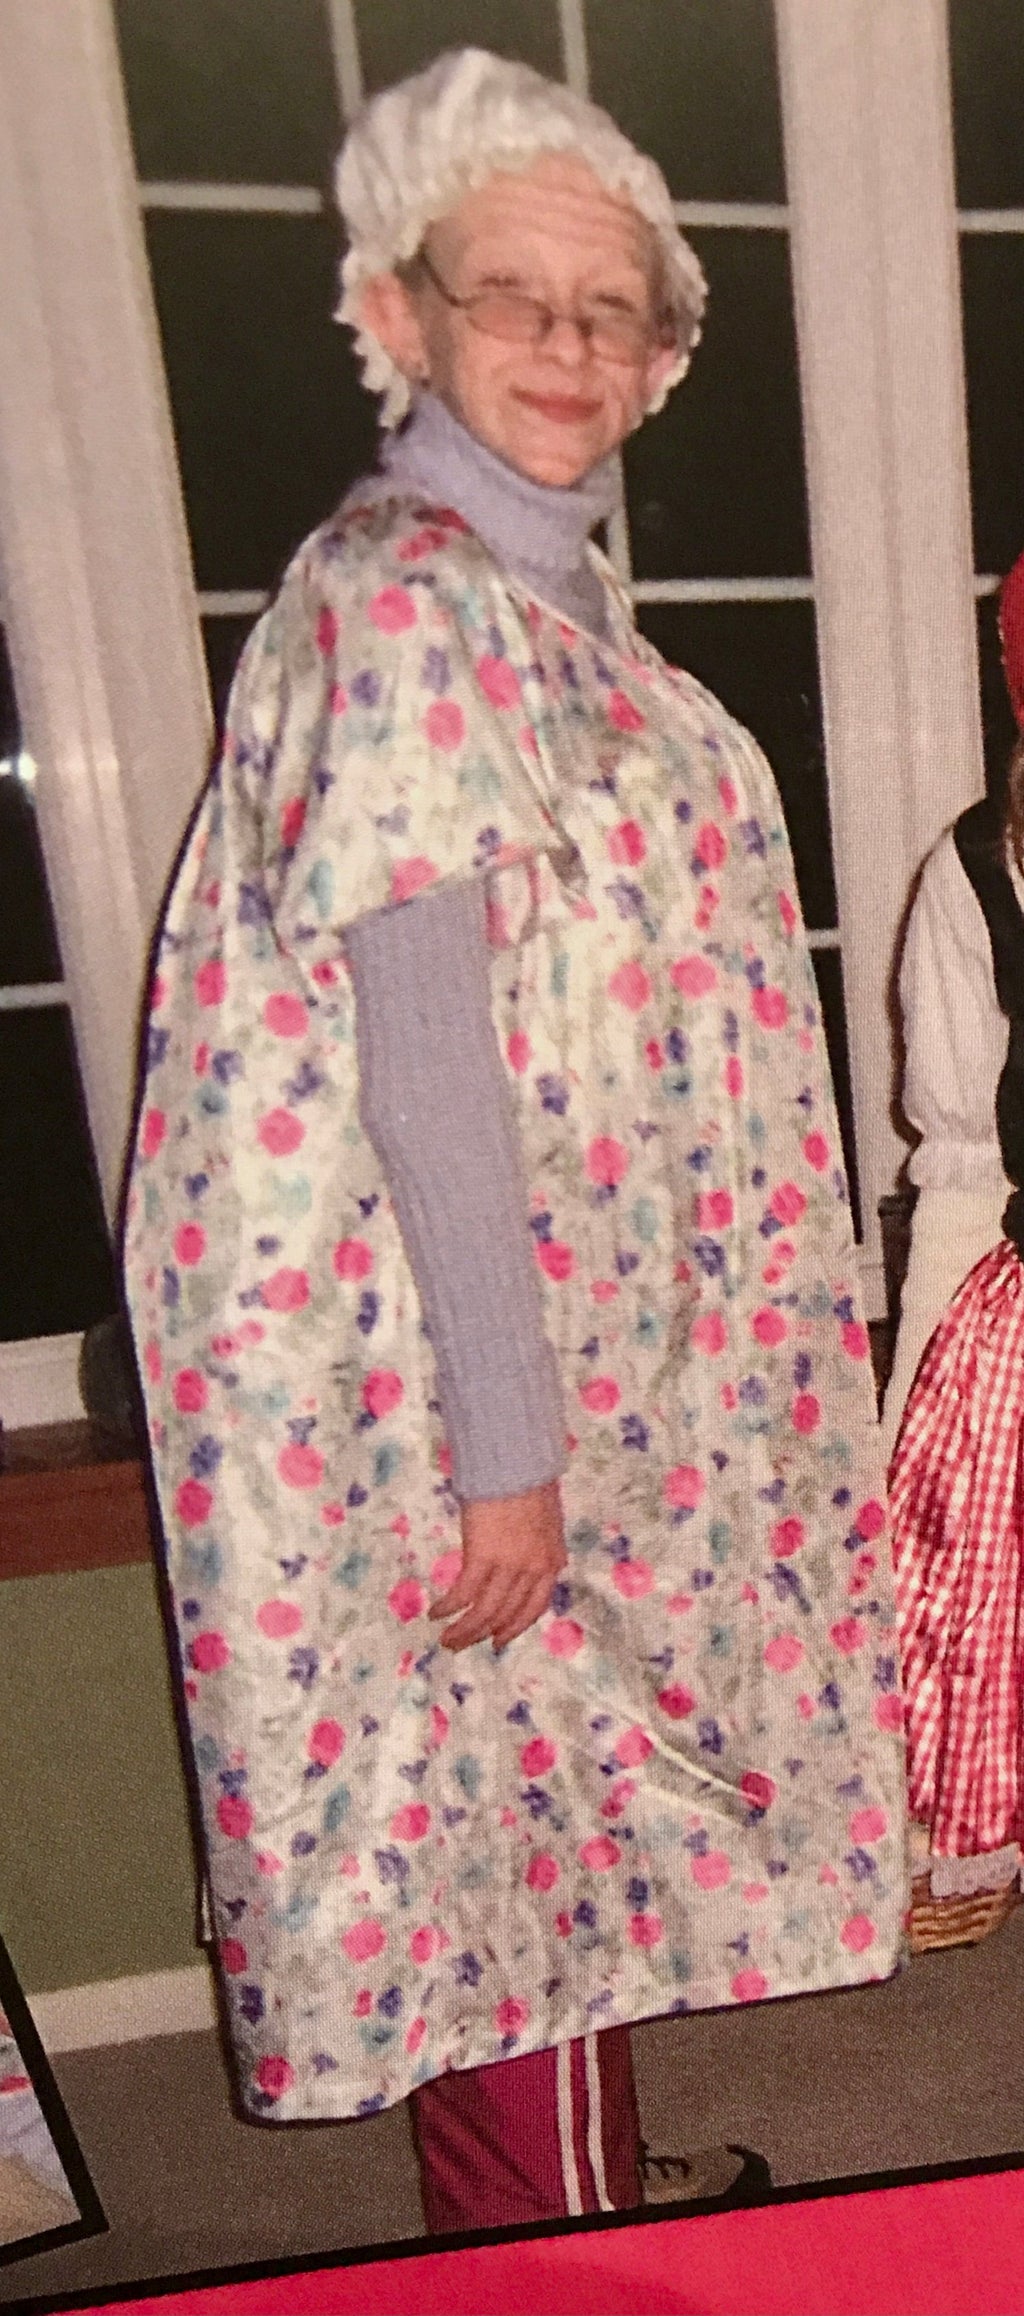 Girl poses as a grandmother for Halloween